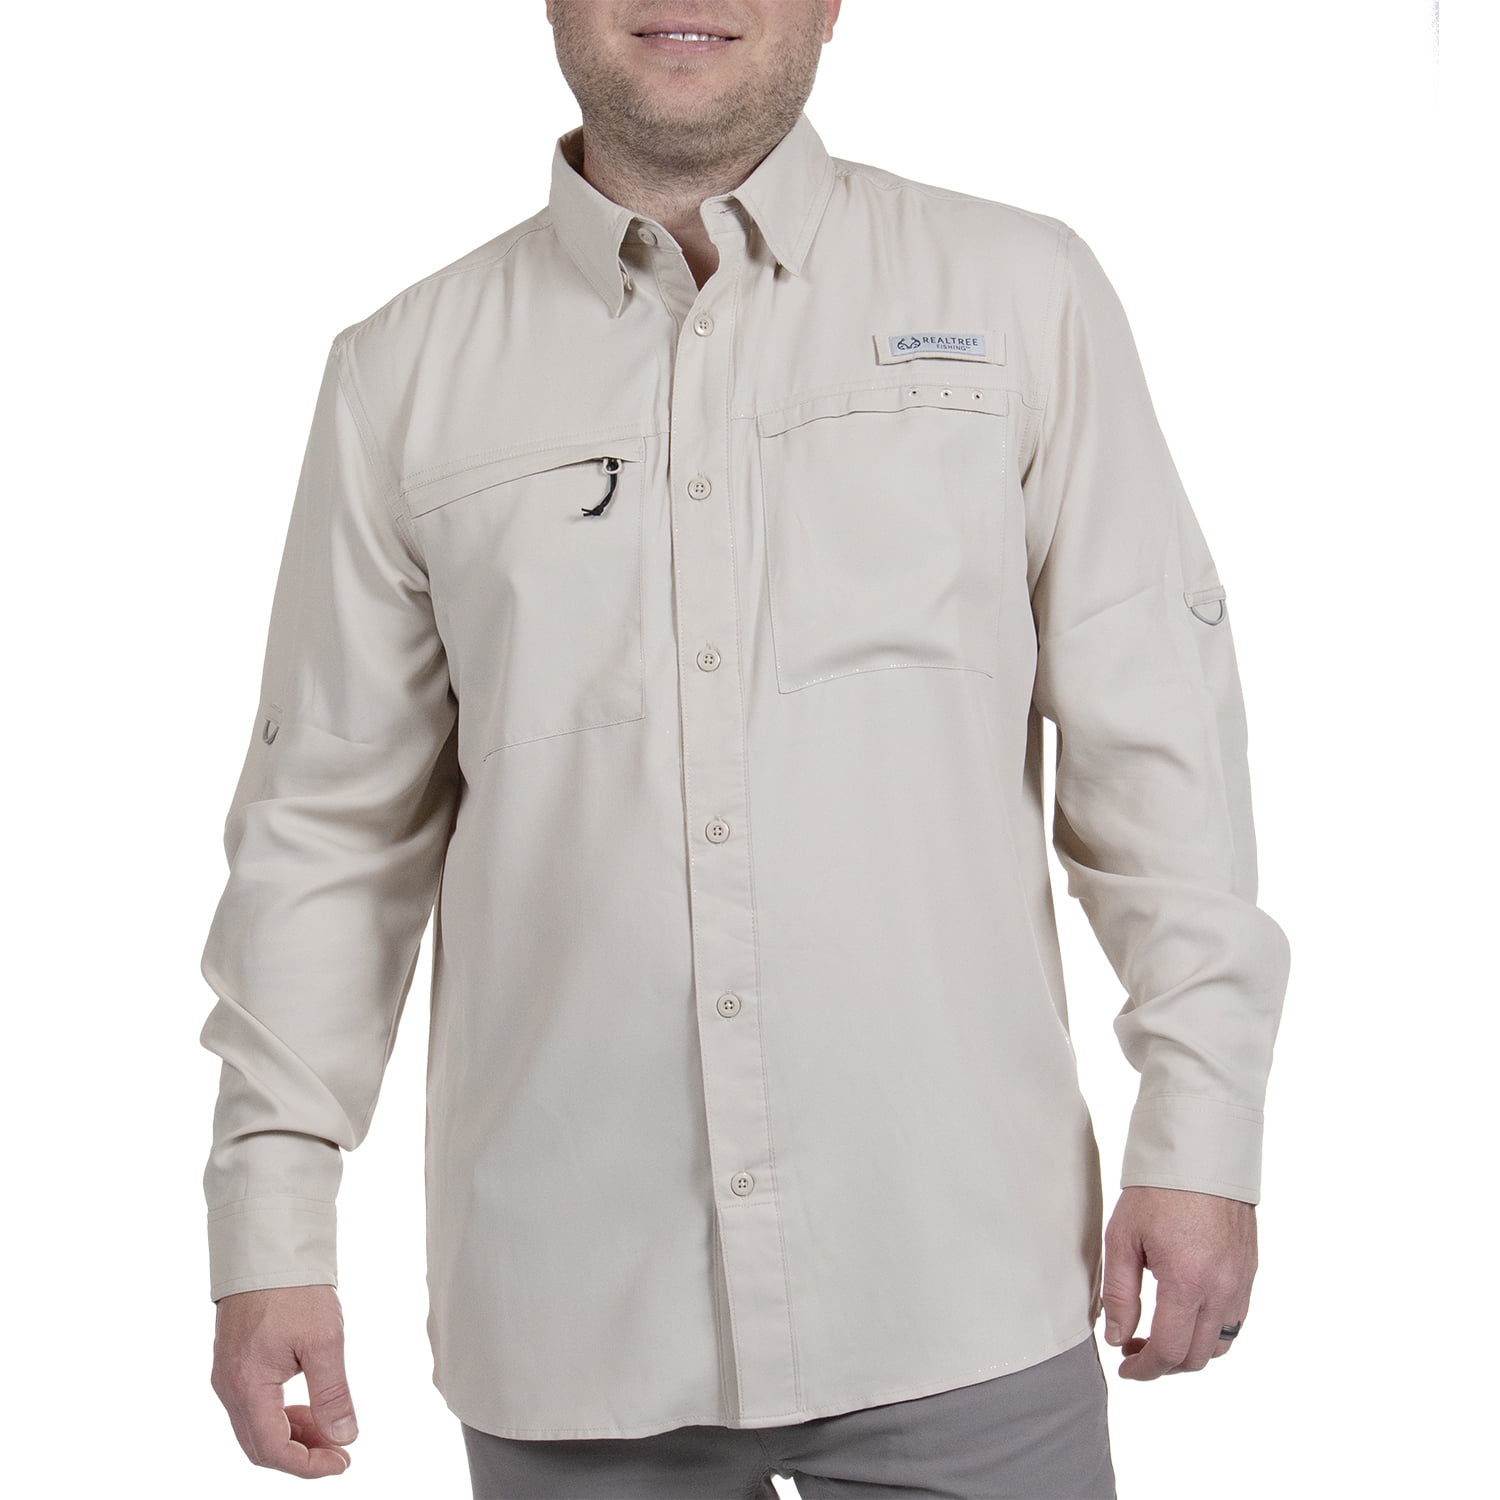 Realtree Long Sleeve Fishing Guide Shirt for Men, Sahara, Size Small 